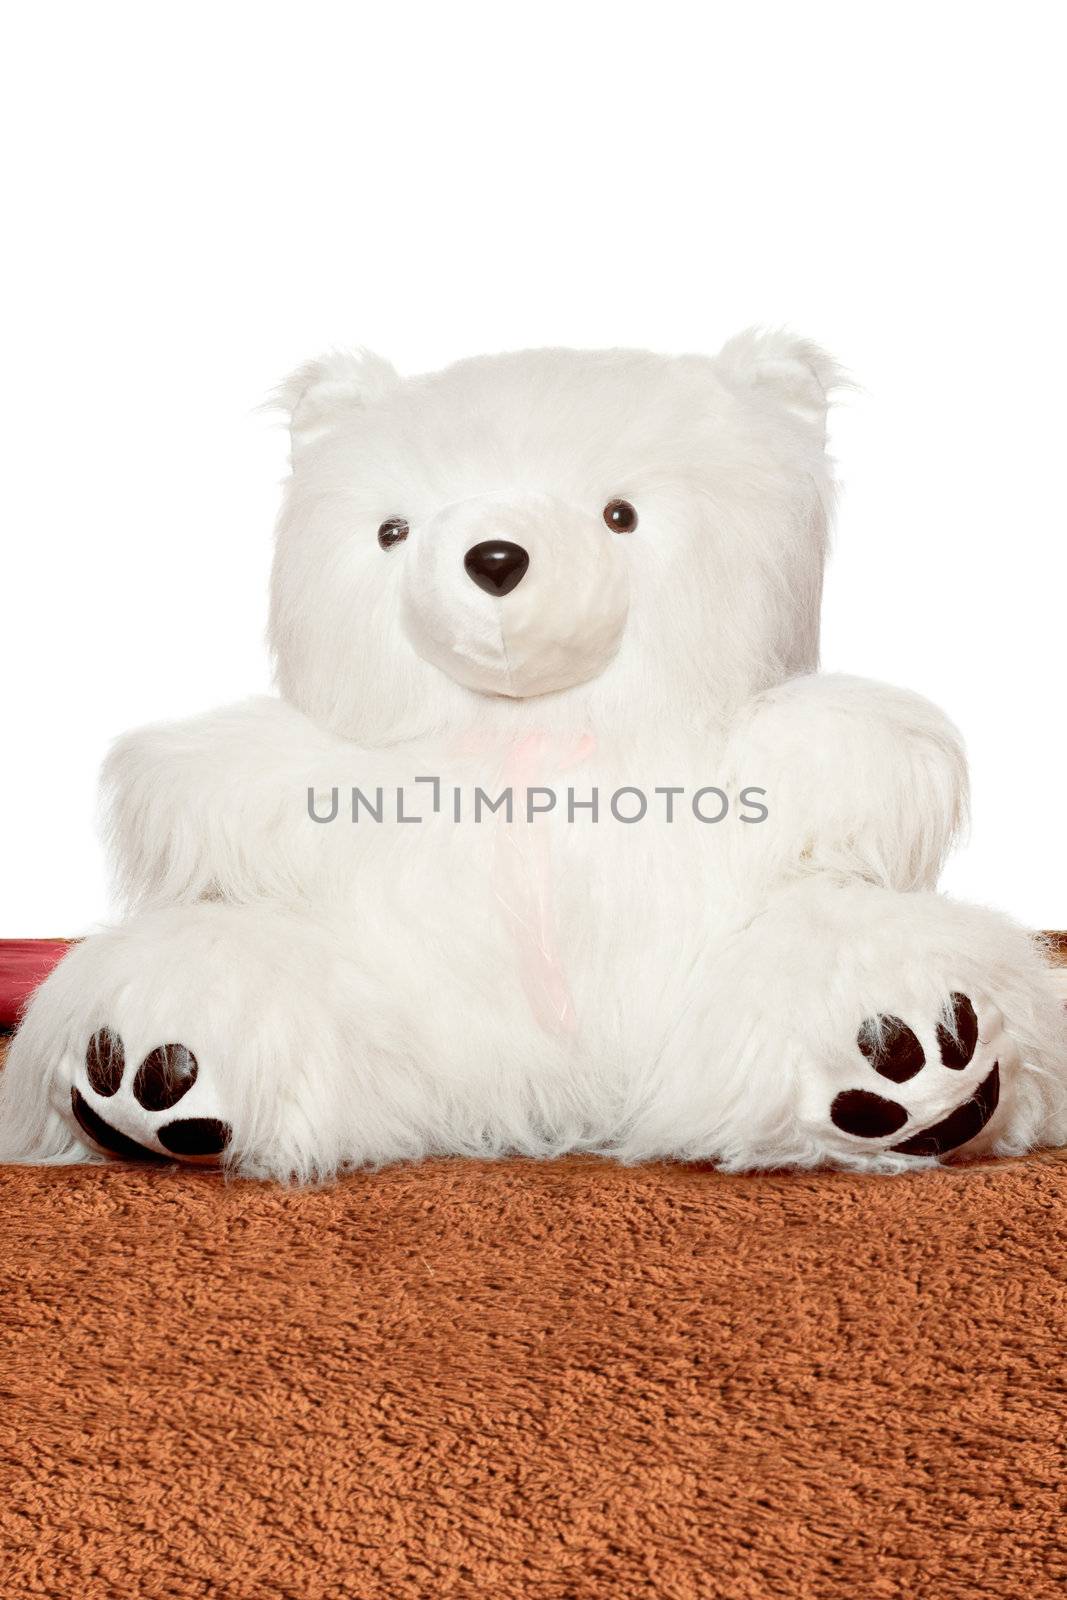 Big white teddy bear sitting on a brown blanket